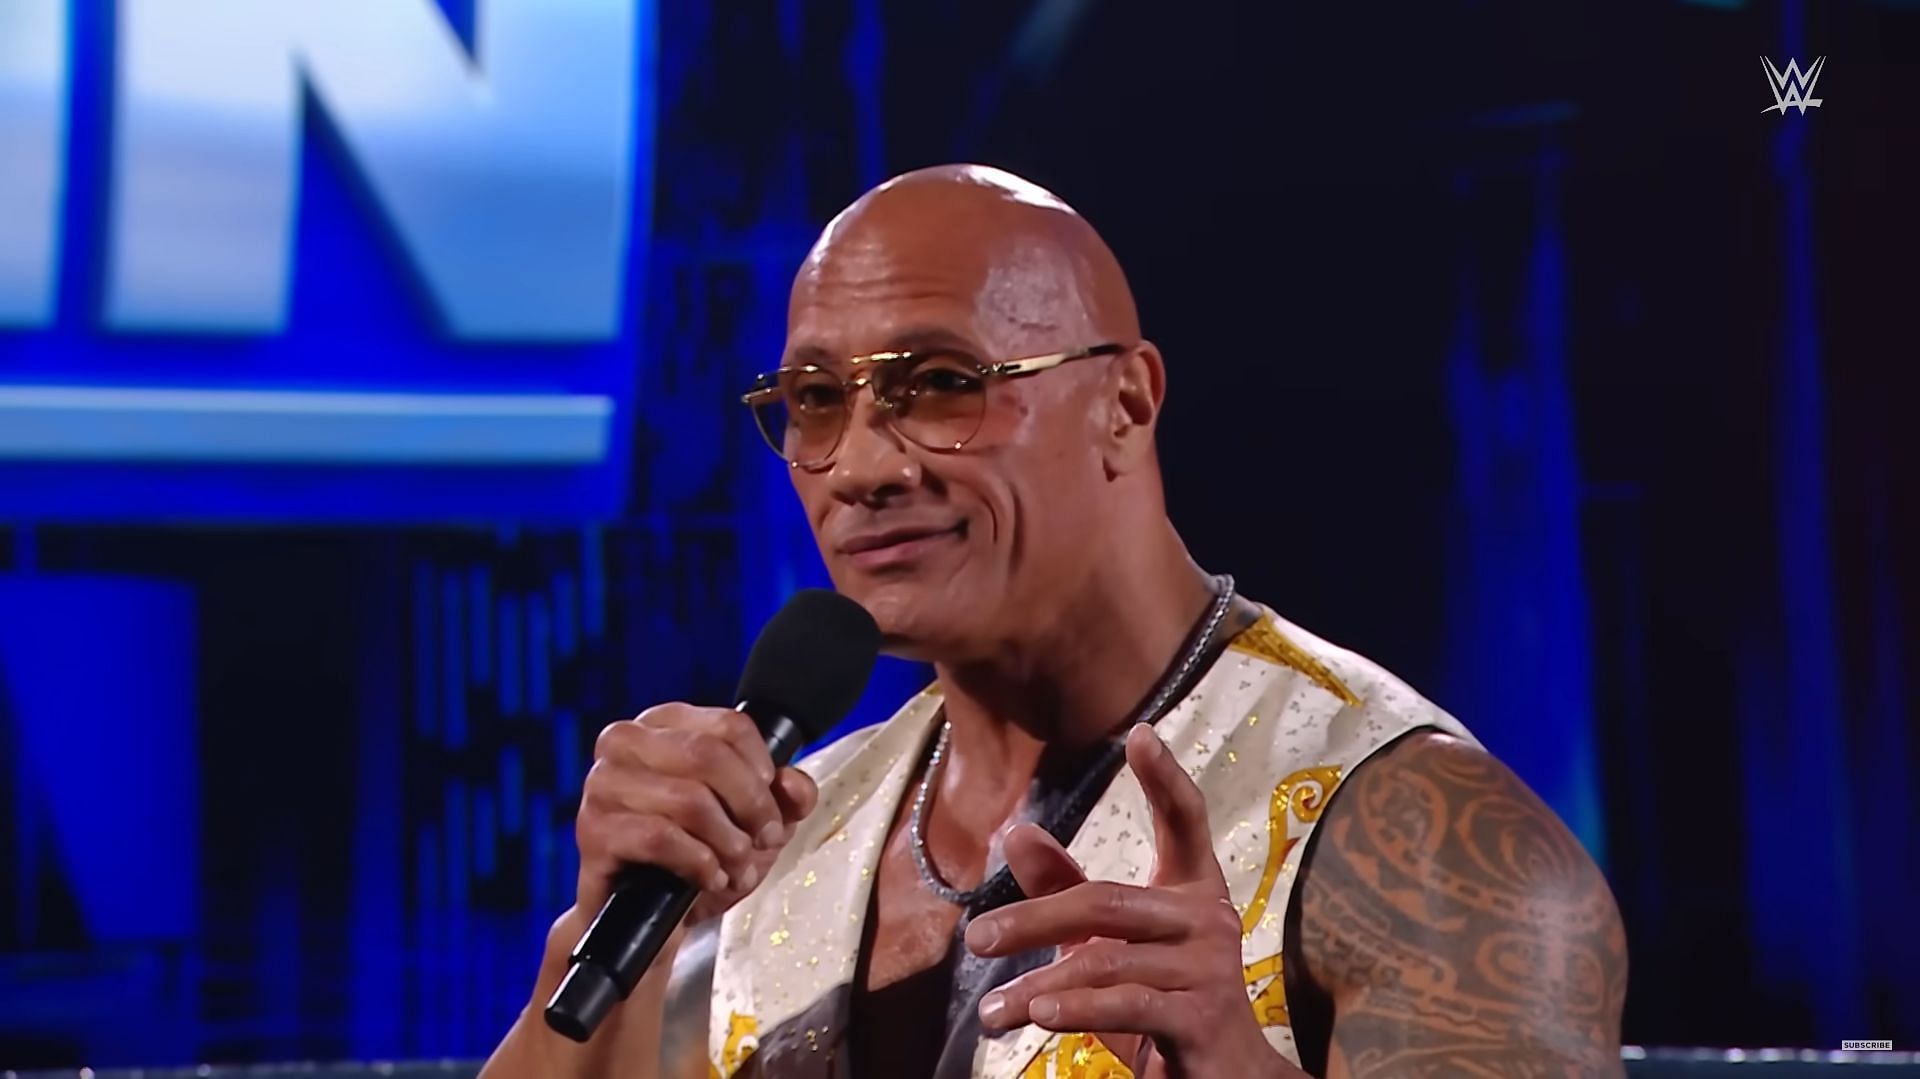 The Rock on WWE SmackDown (via WWE